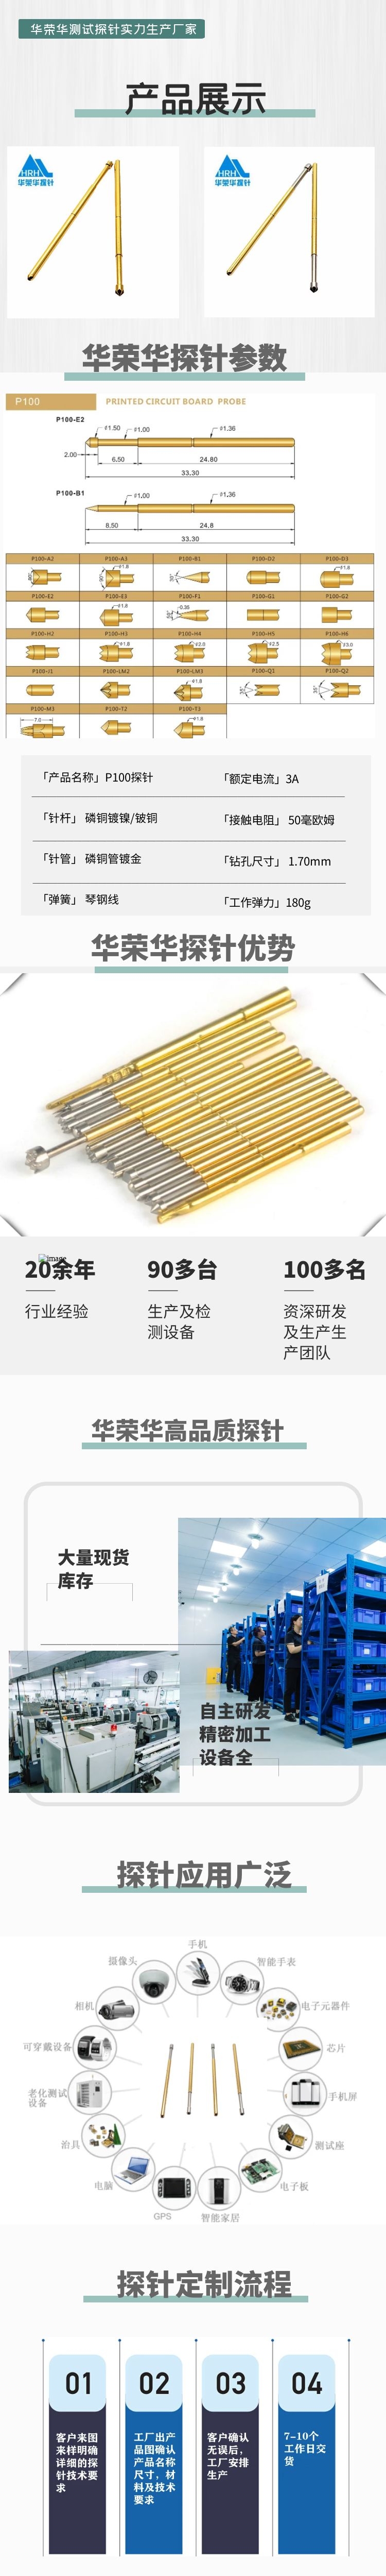 华荣华P100-LM测试探针厂家